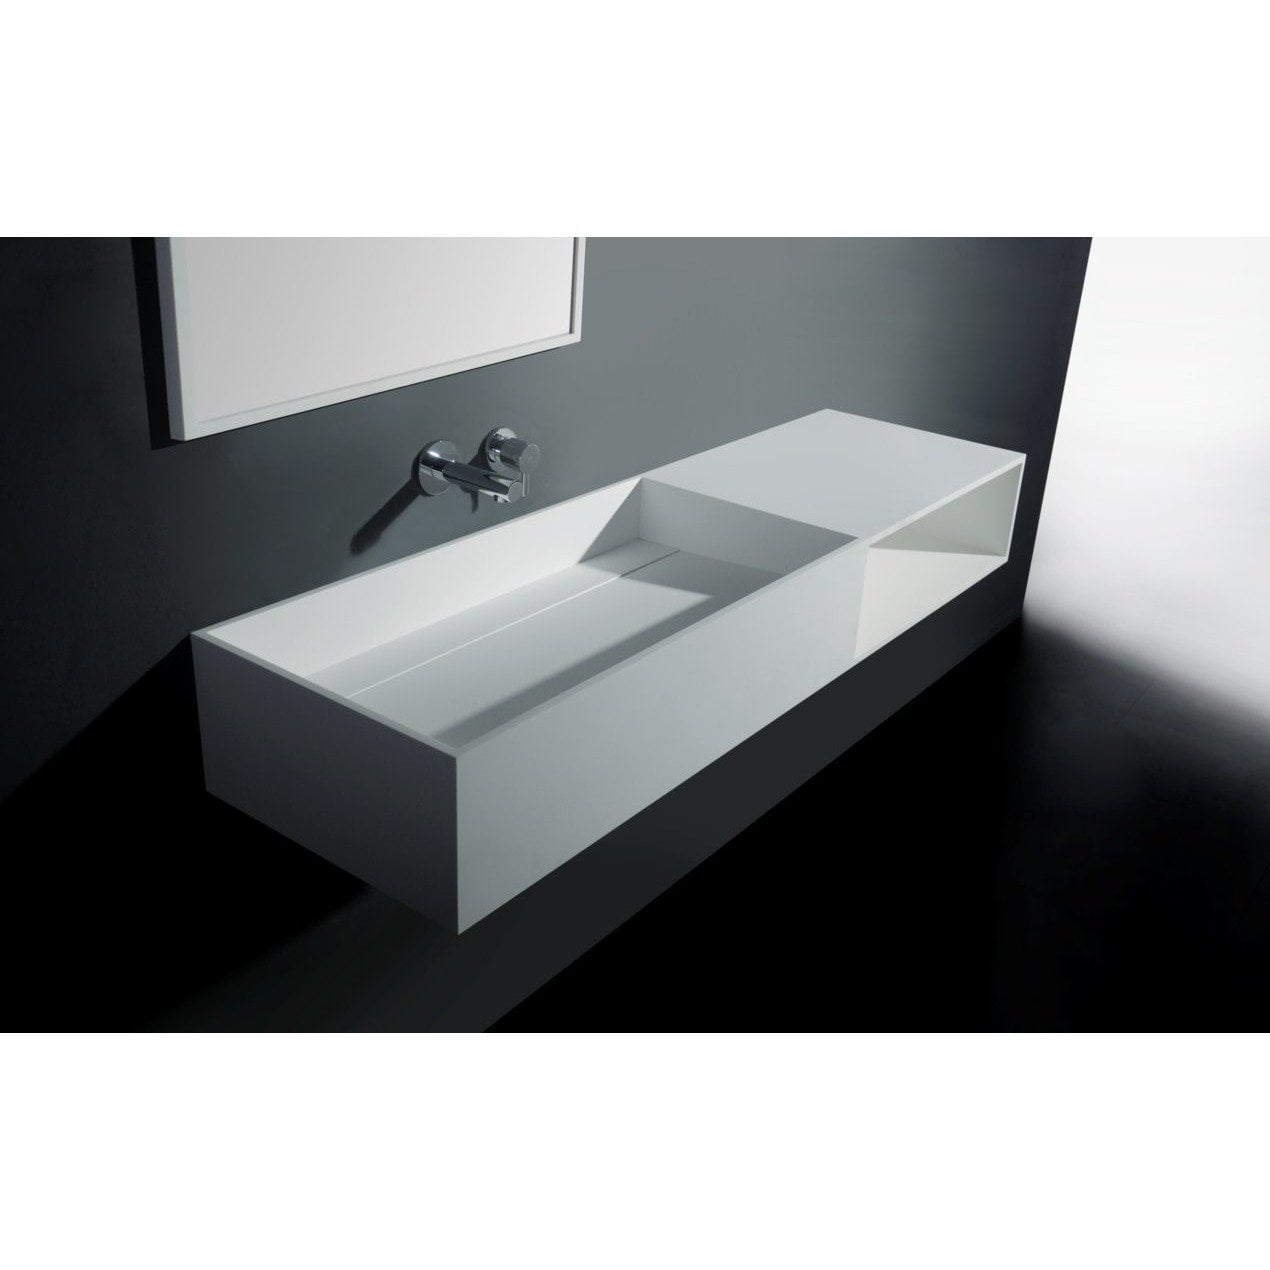 Ideavit 55 Wall Mounted Single Sink Bathroom Vanity With One Shelf